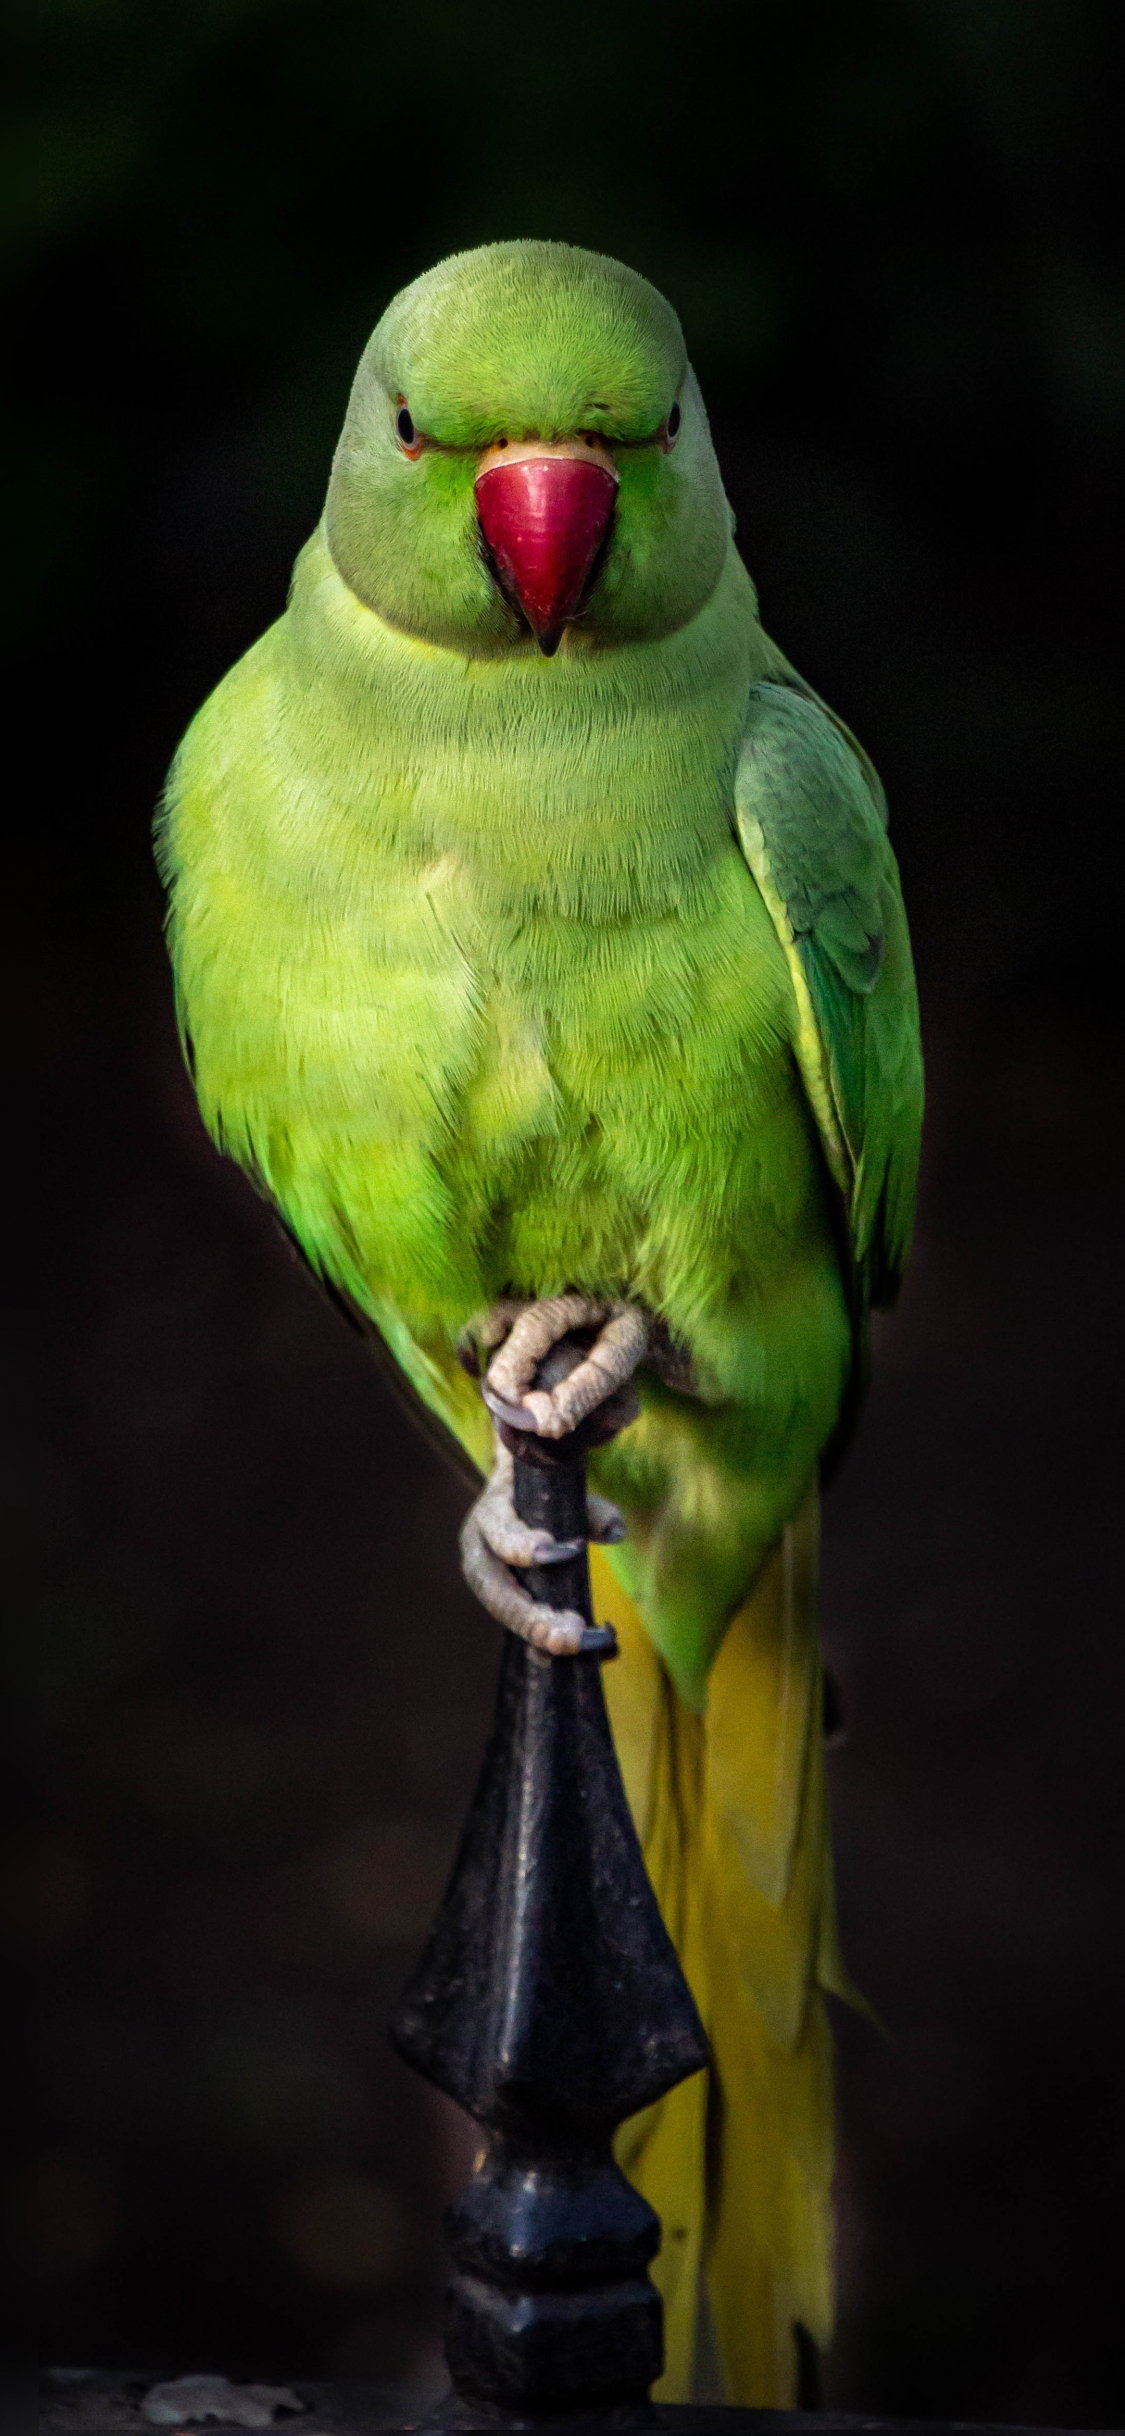 1125x2436 Download parrot, green, bird, sit, portrait wallpaper, iphone x, hd image, background, 8309